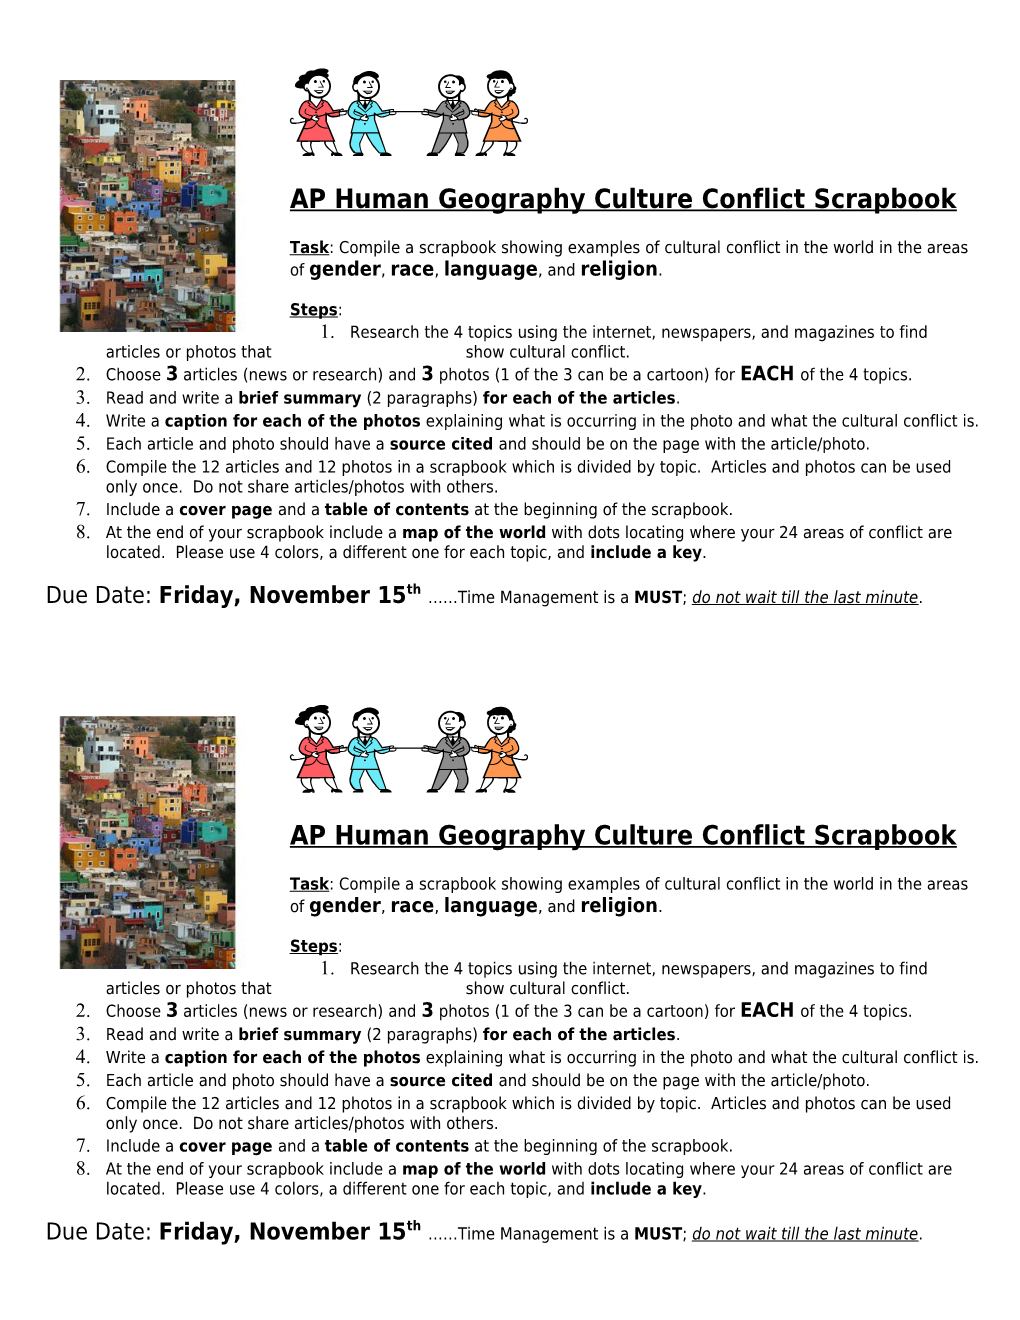 Culture Conflict Scrapbook